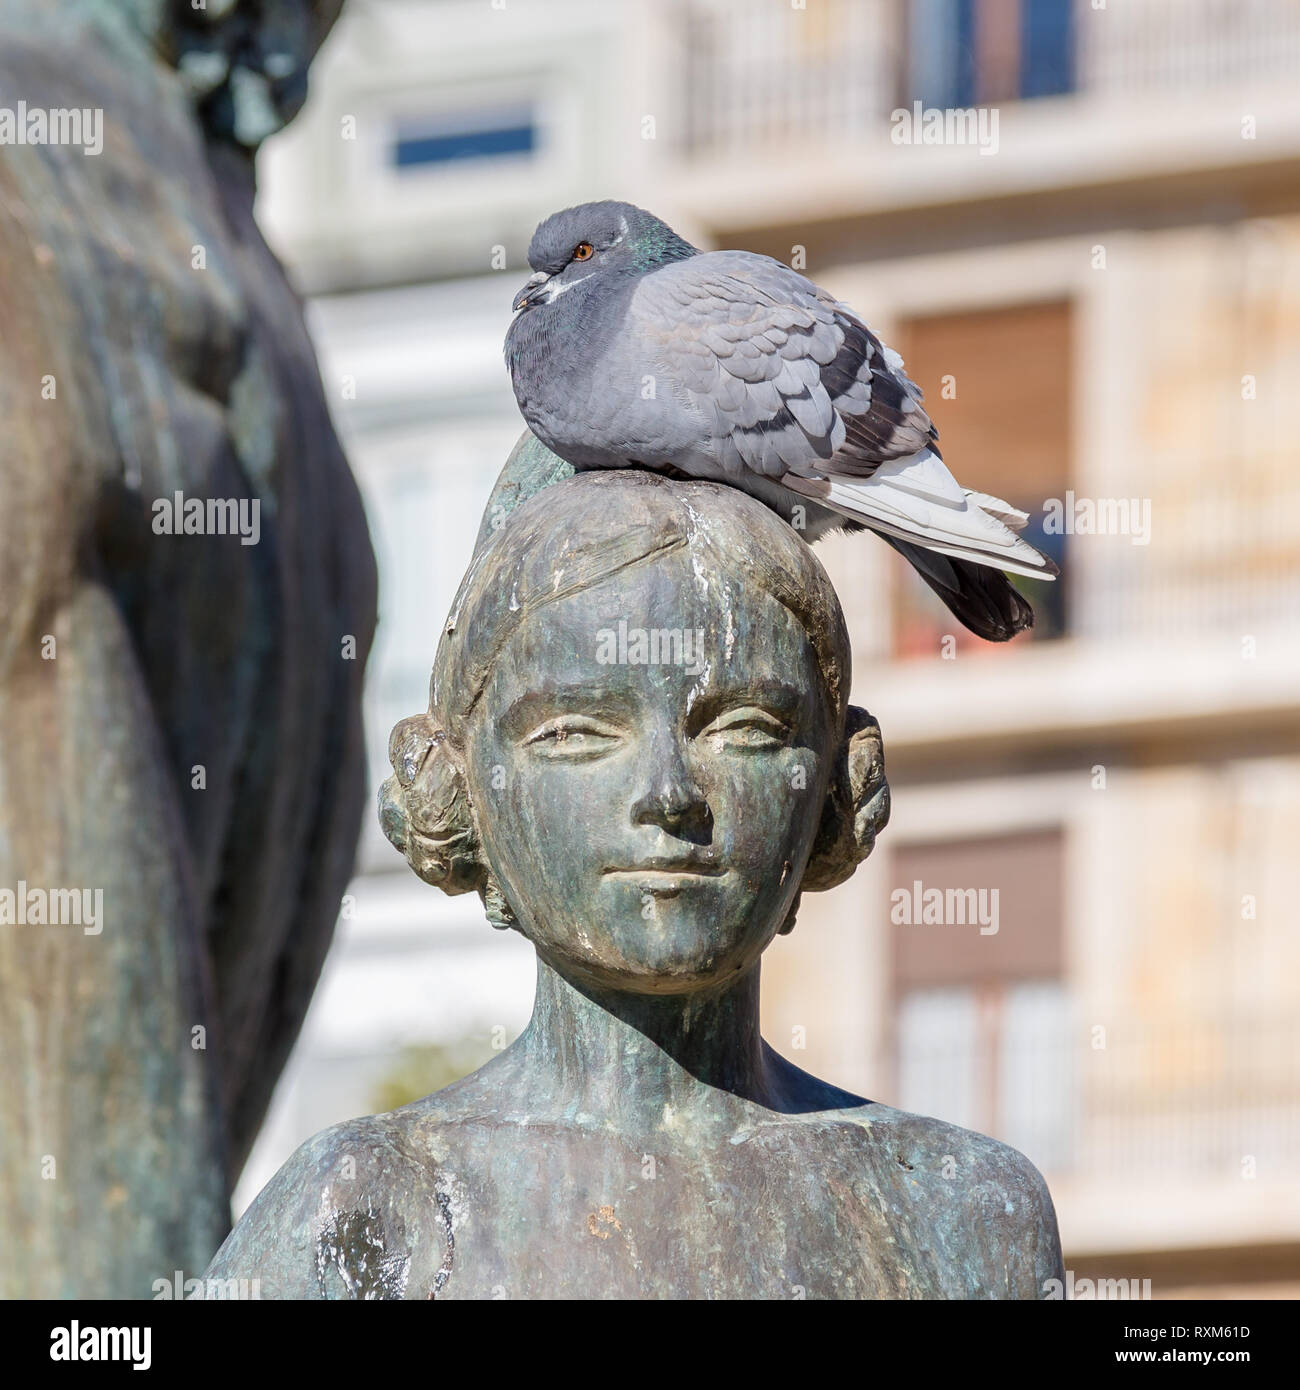 Valencia,Spain December 02, 2016: Pigeon on head of girl from historic fountain at Plaza de la Virgen in Valencia Spain. Stock Photo